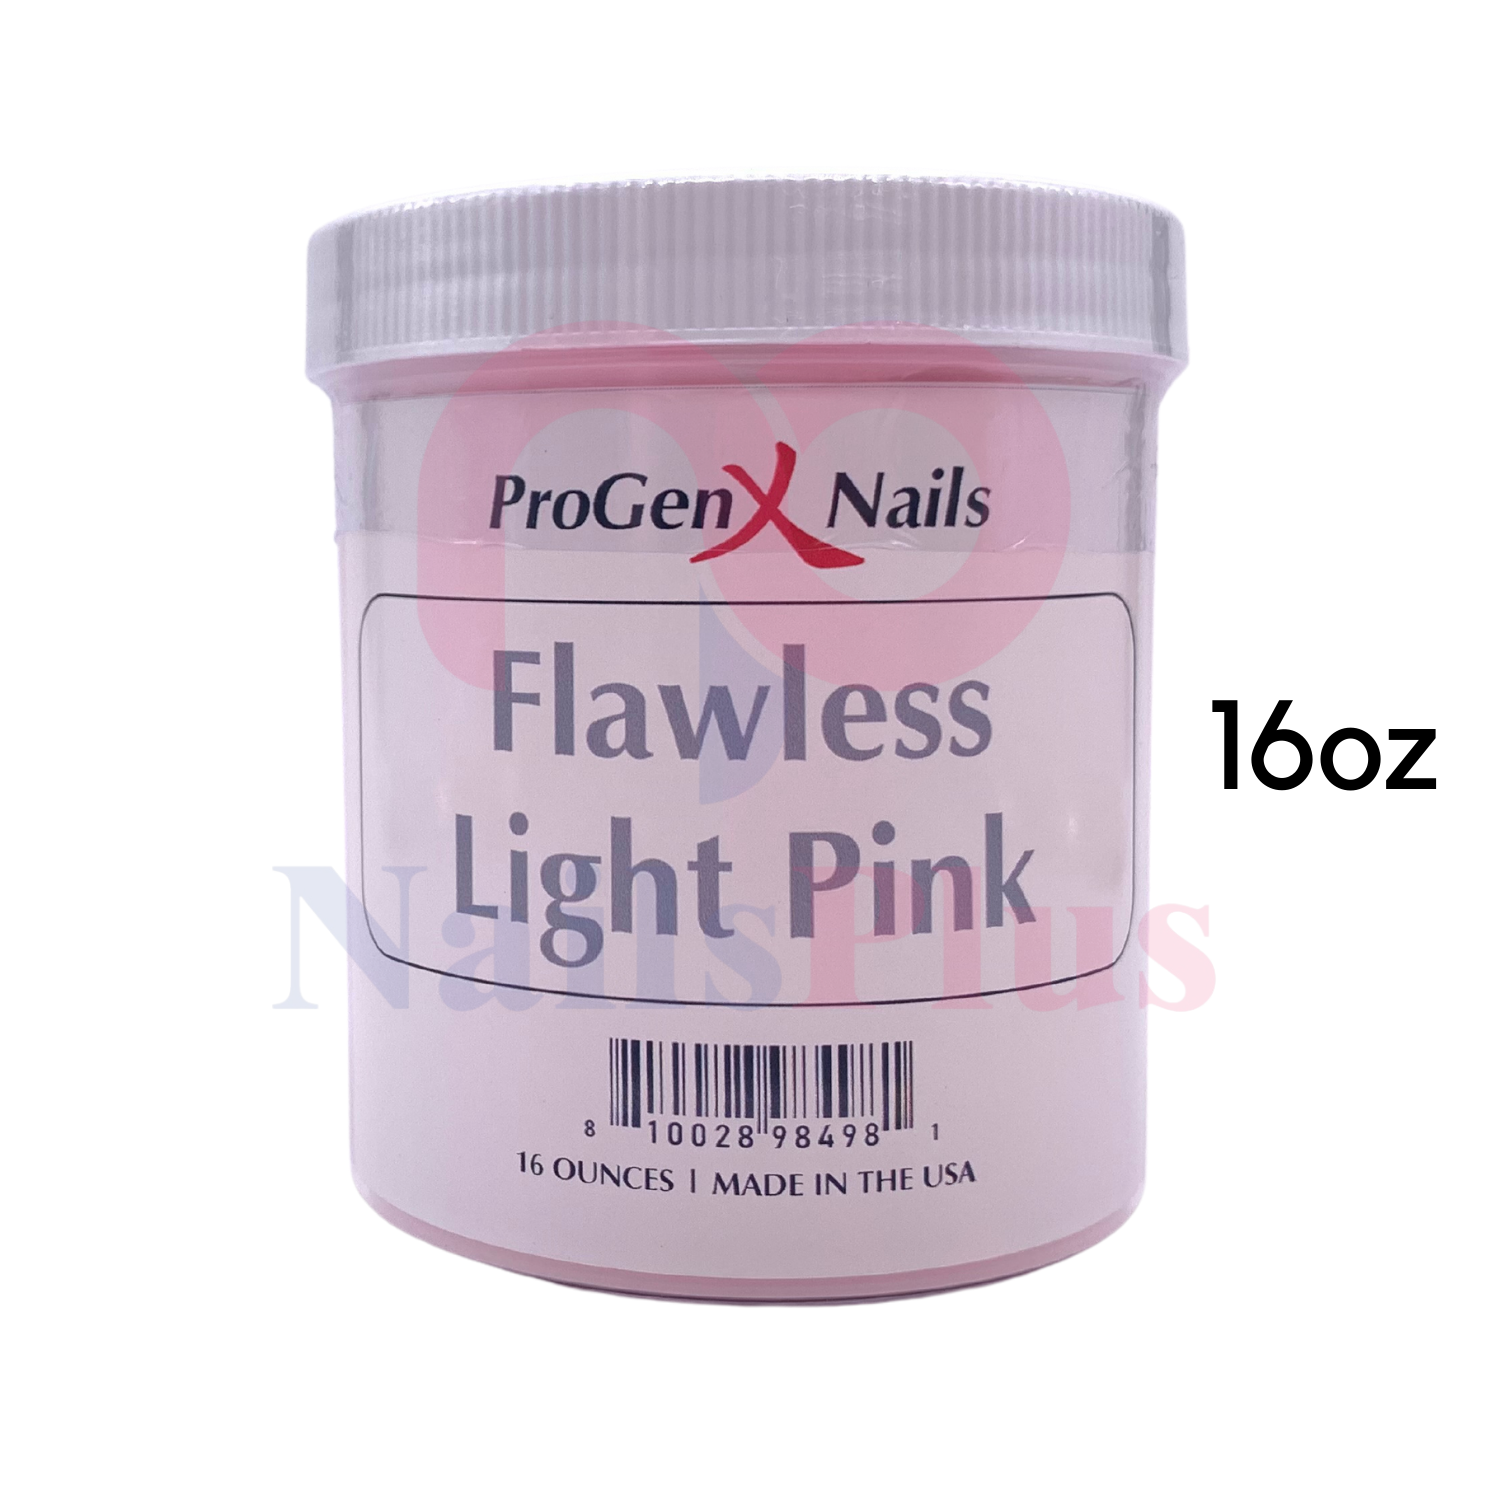 Flawless Light Pink